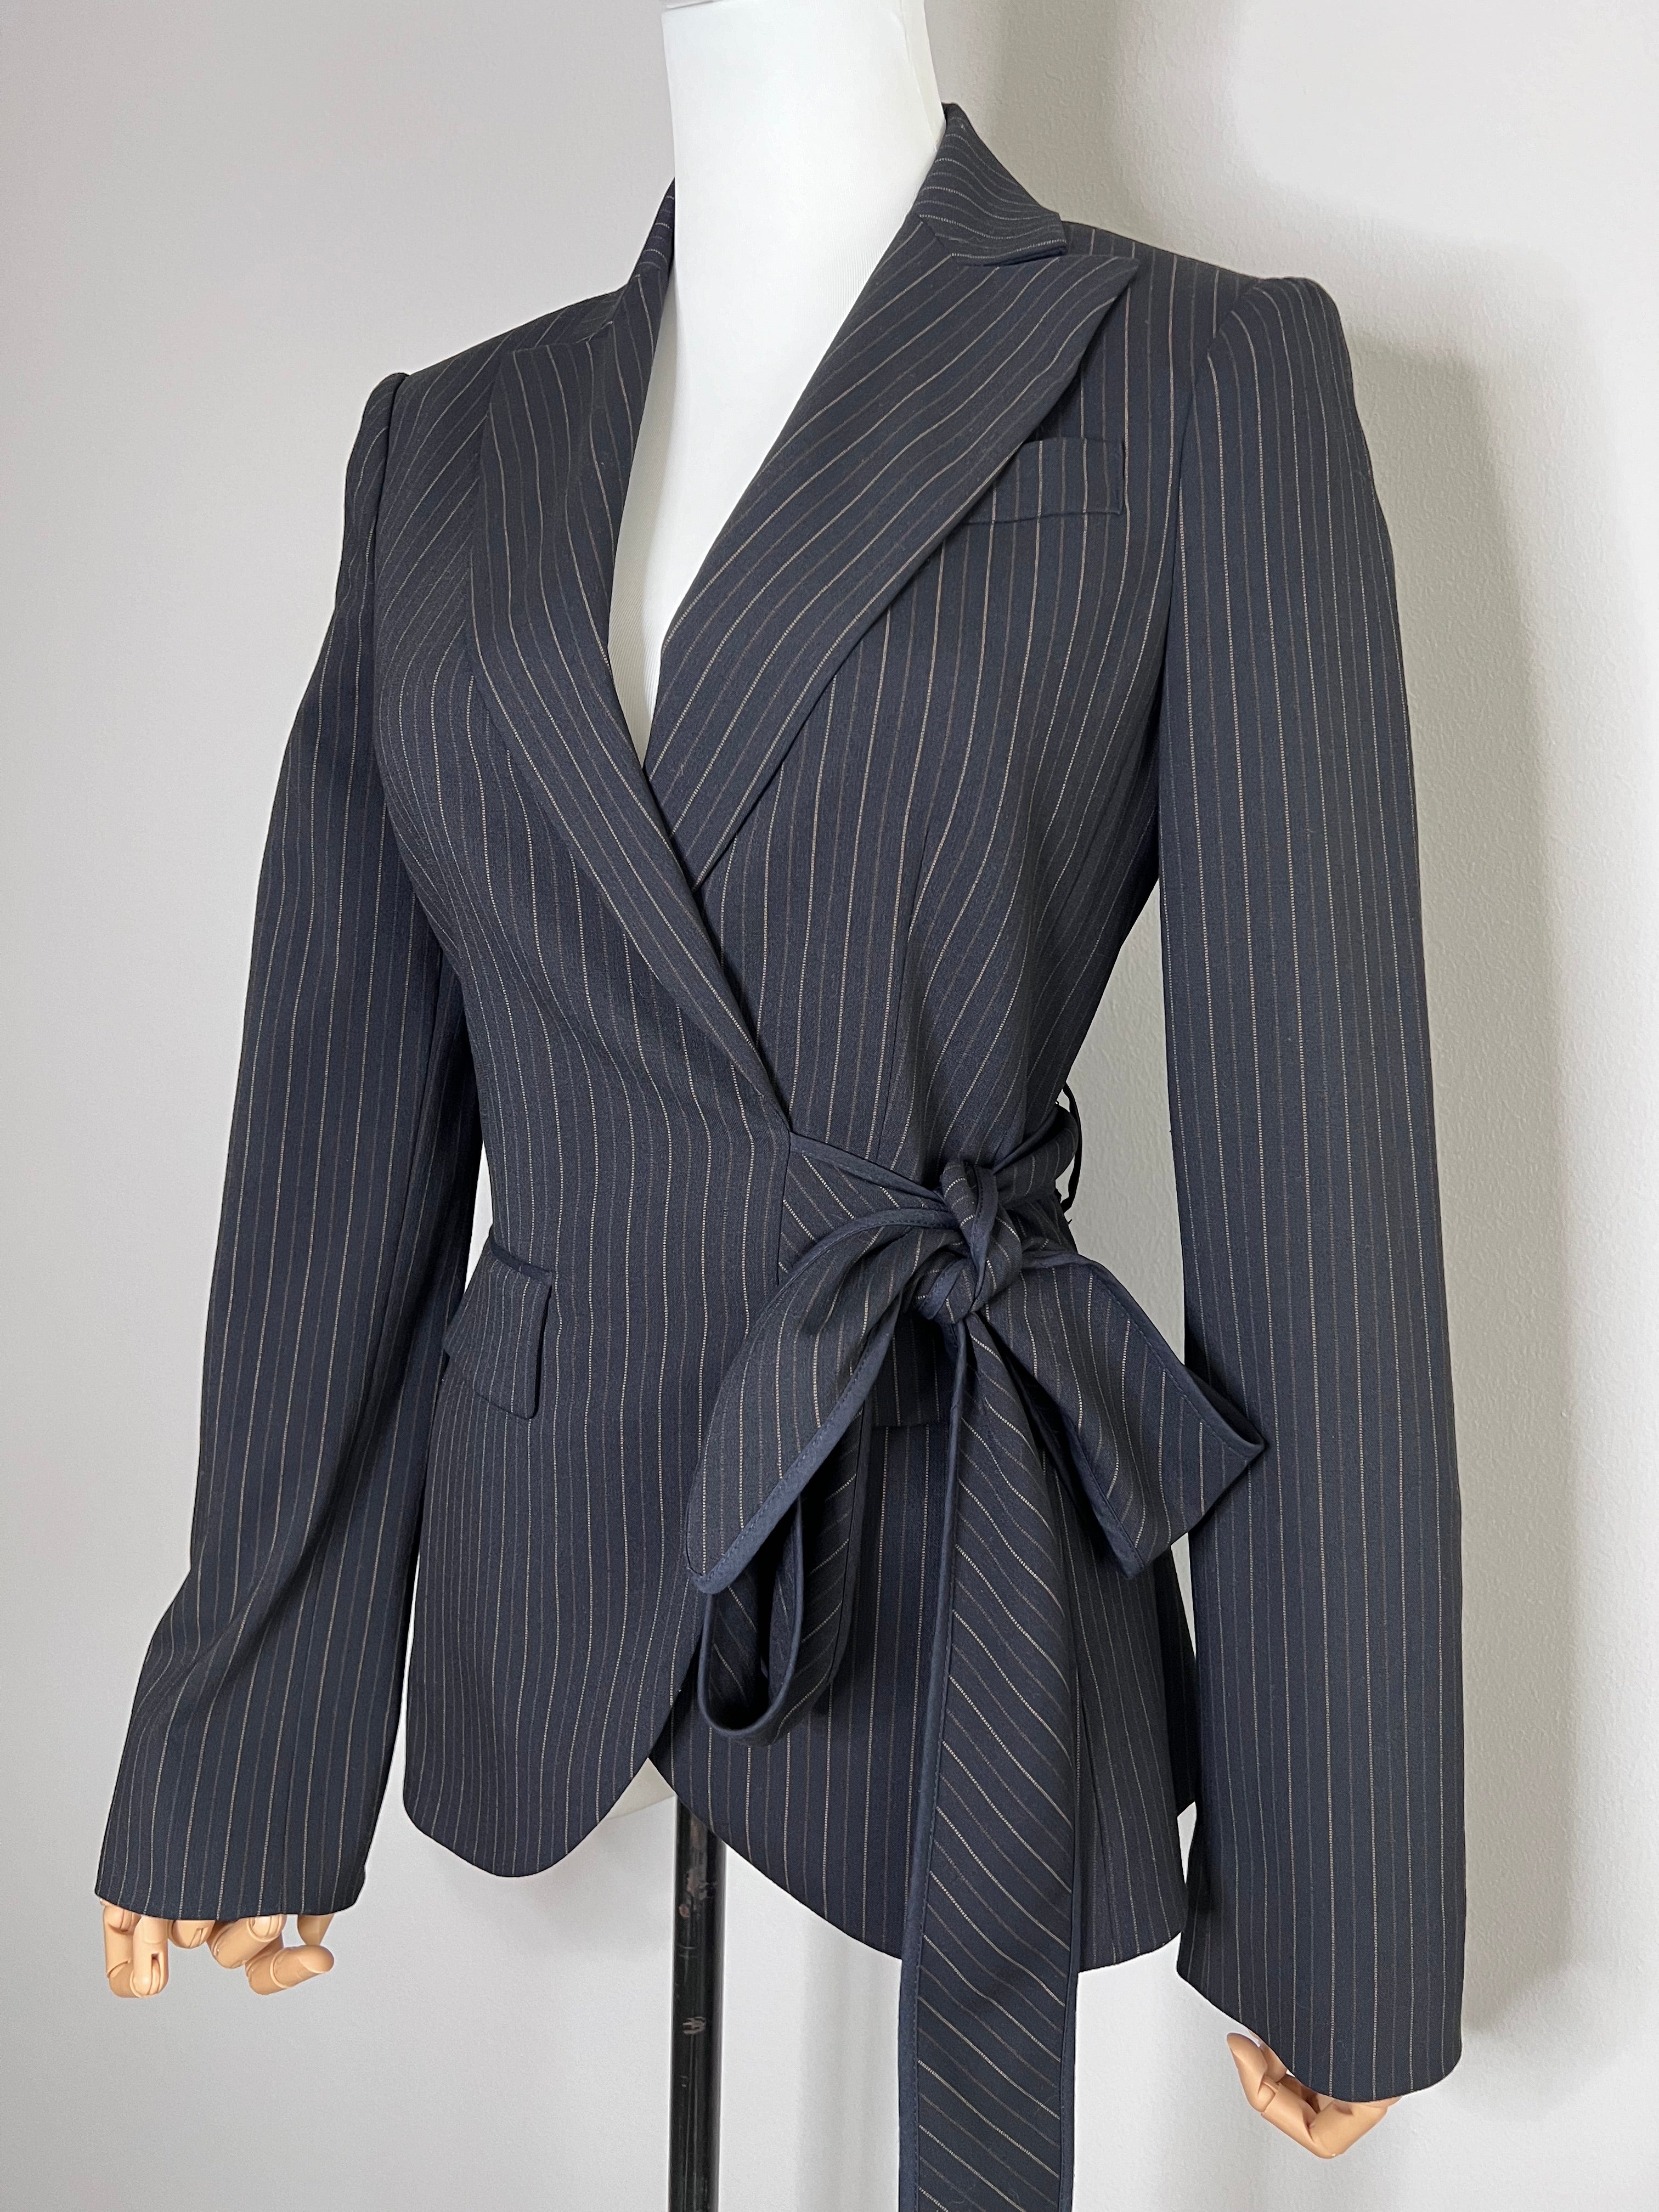 Pintsripe pattern navy blue Tied bow blazer jacket - BCBGMAXAZRIA